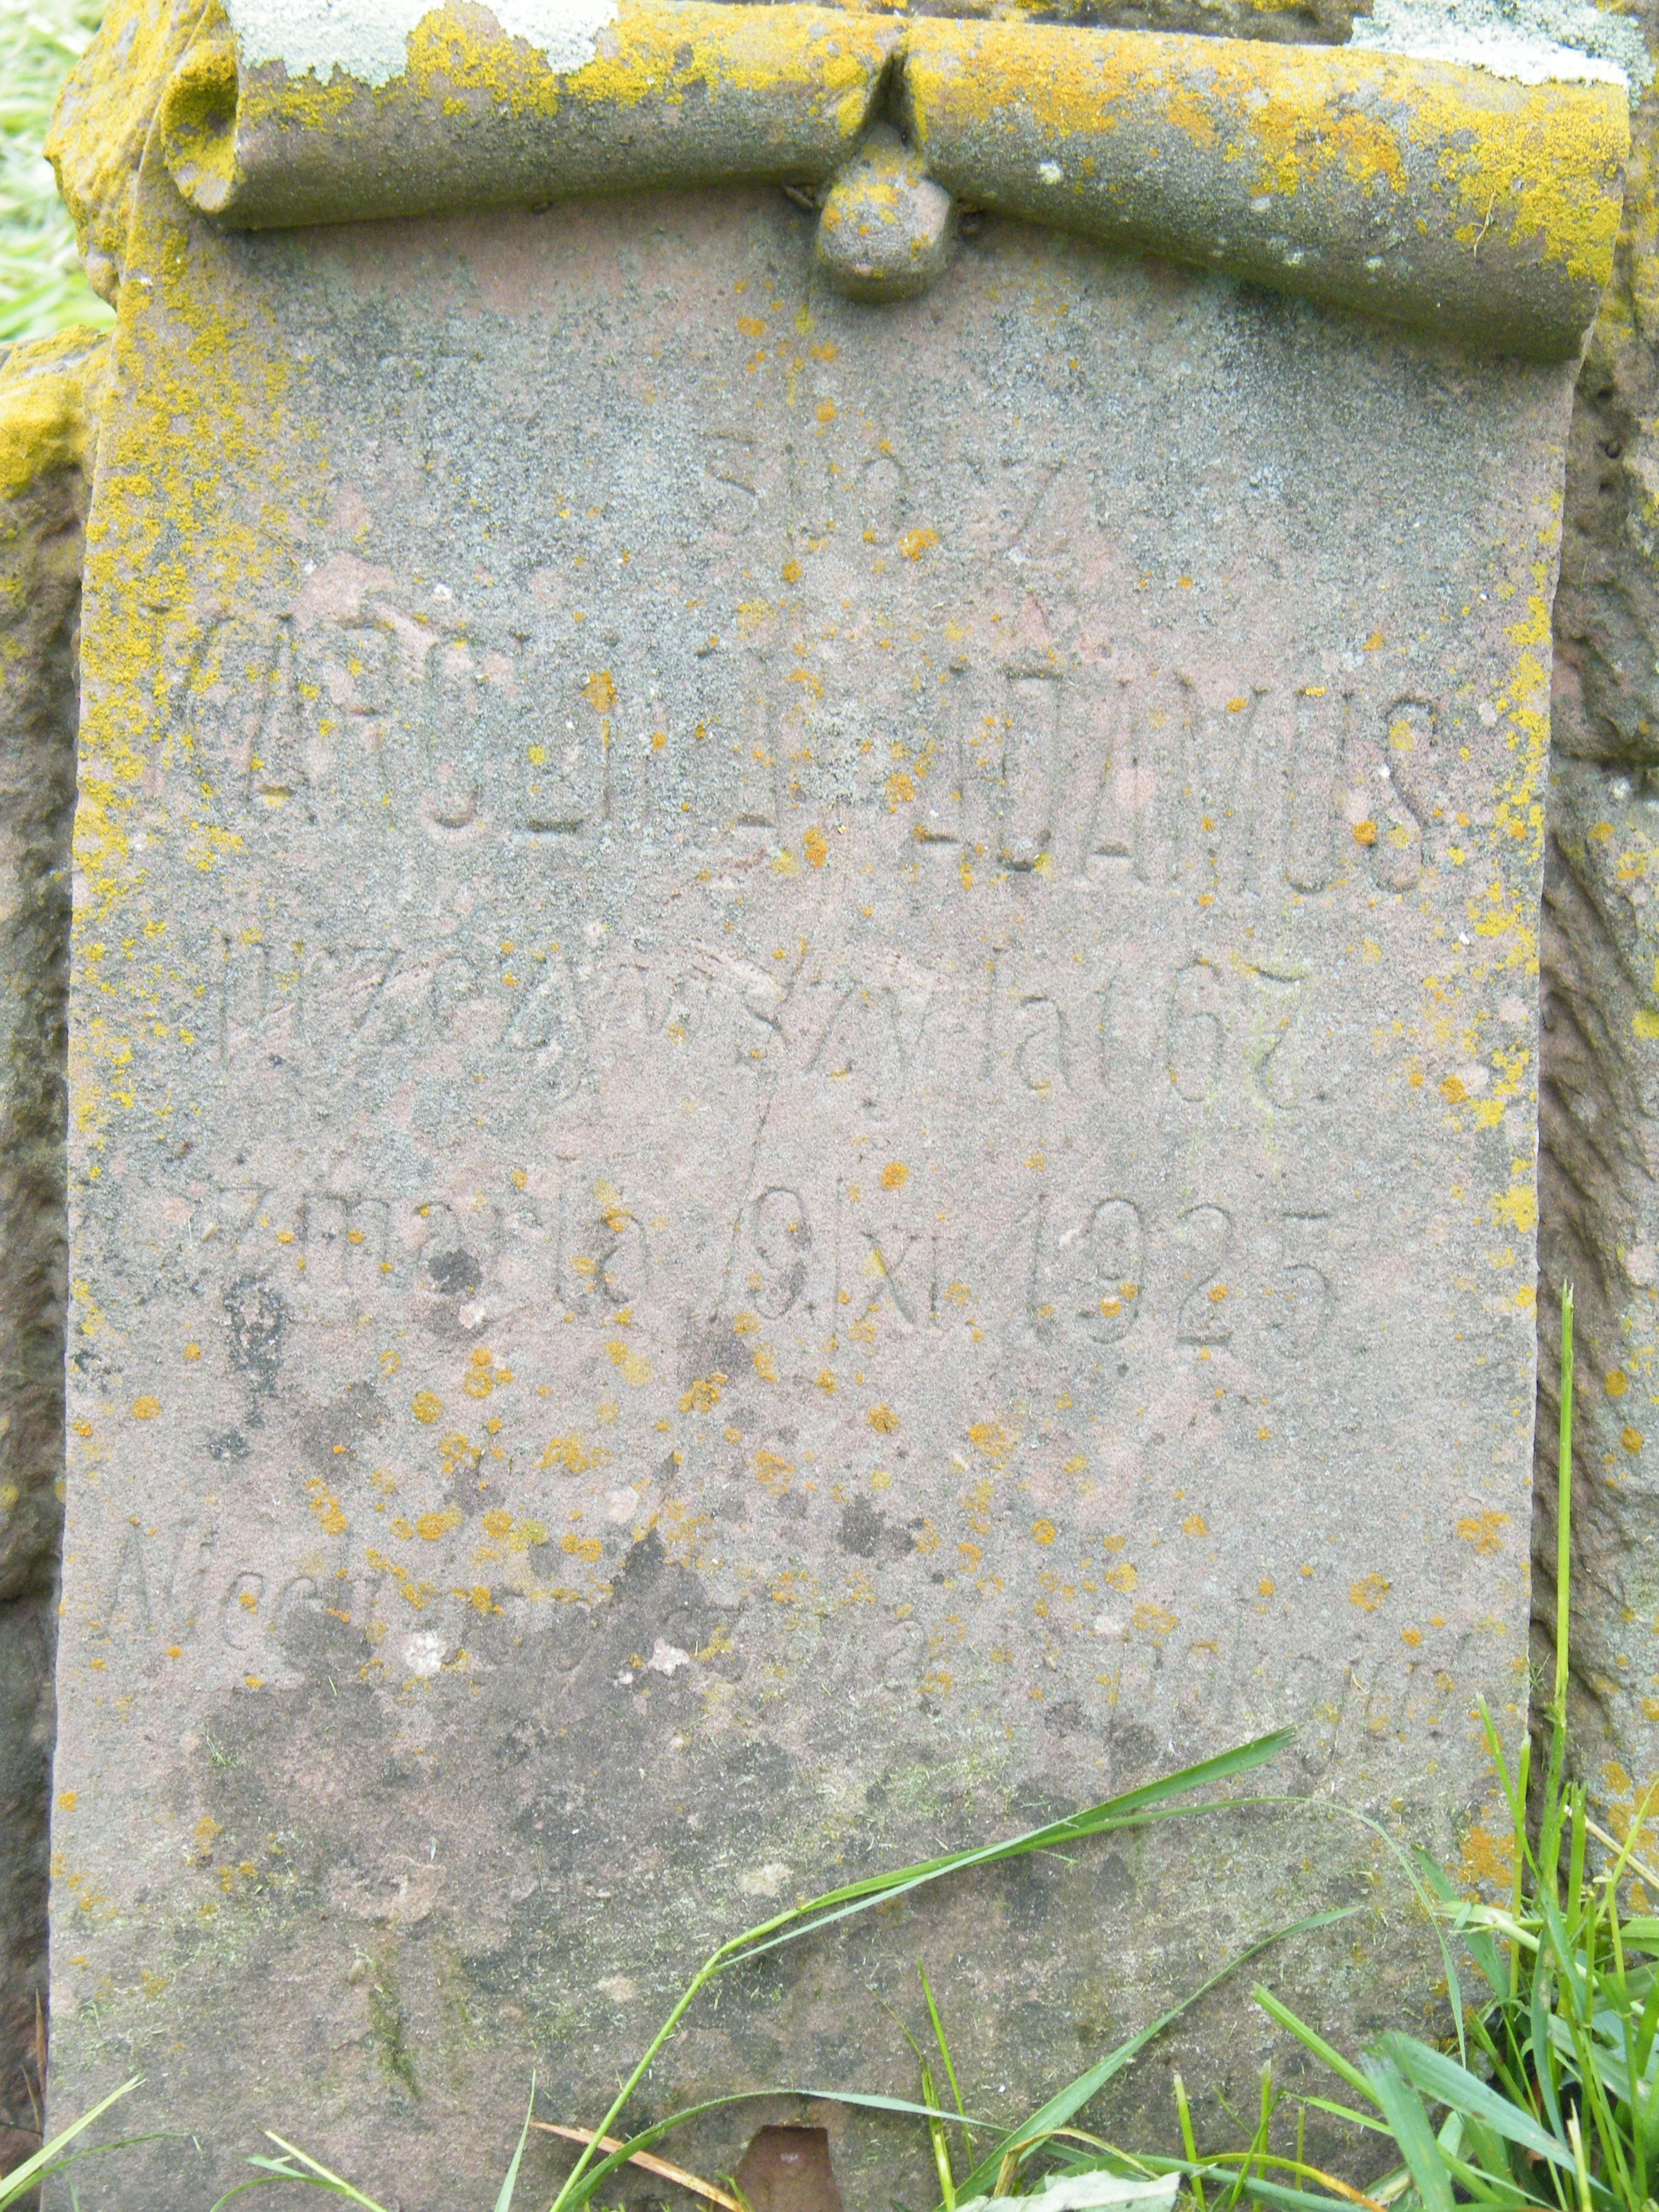 Inscription from the gravestone of Karolina Adamos, cemetery in Hlubočko Wielkie